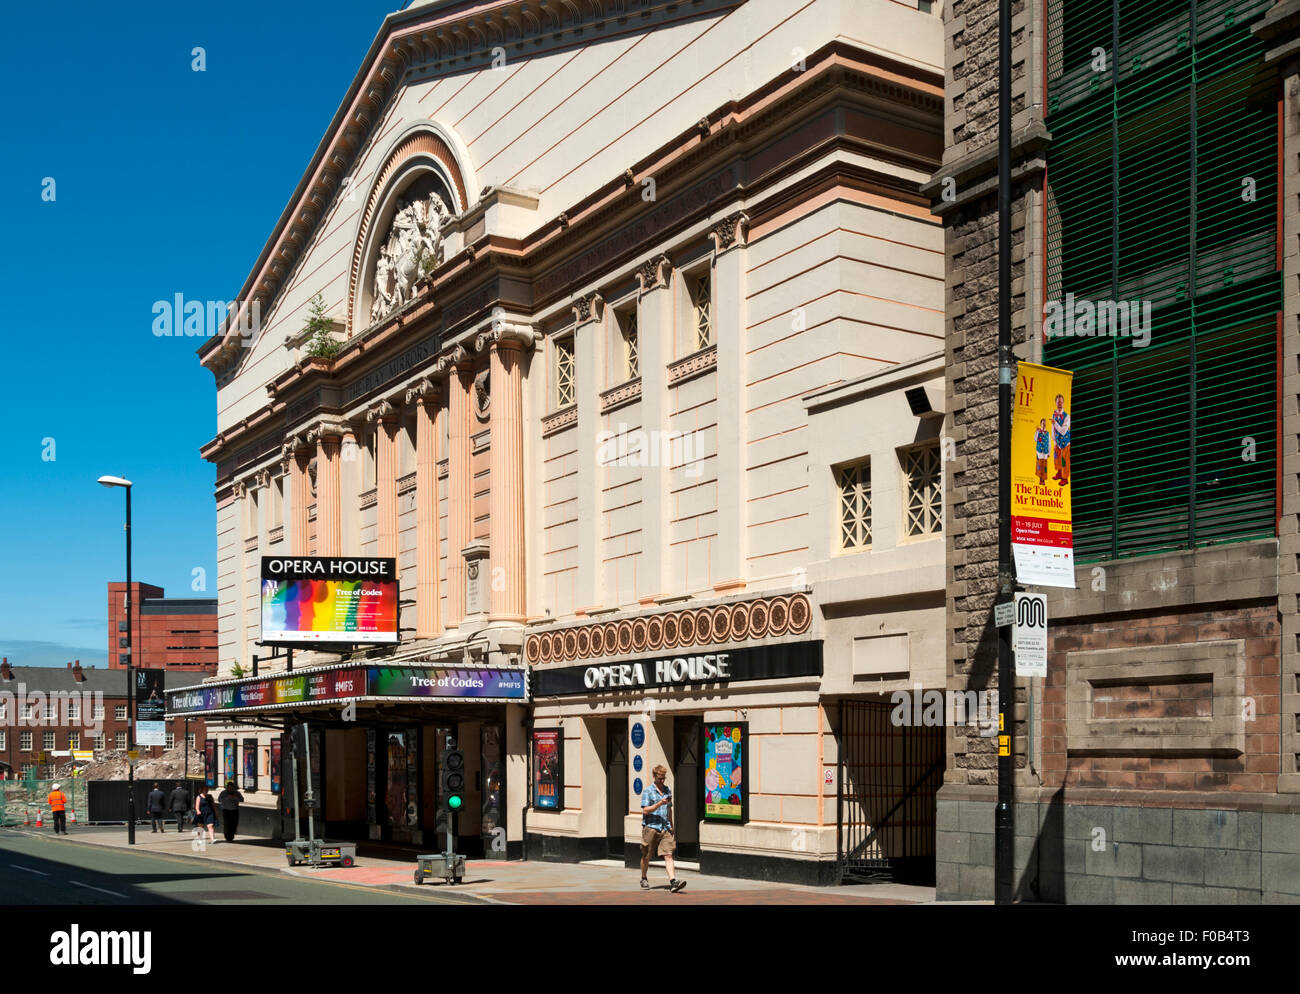 Das Opera House Quay Street, Manchester, England, UK. Gebaut 1920, grade II aufgeführt. Stockfoto